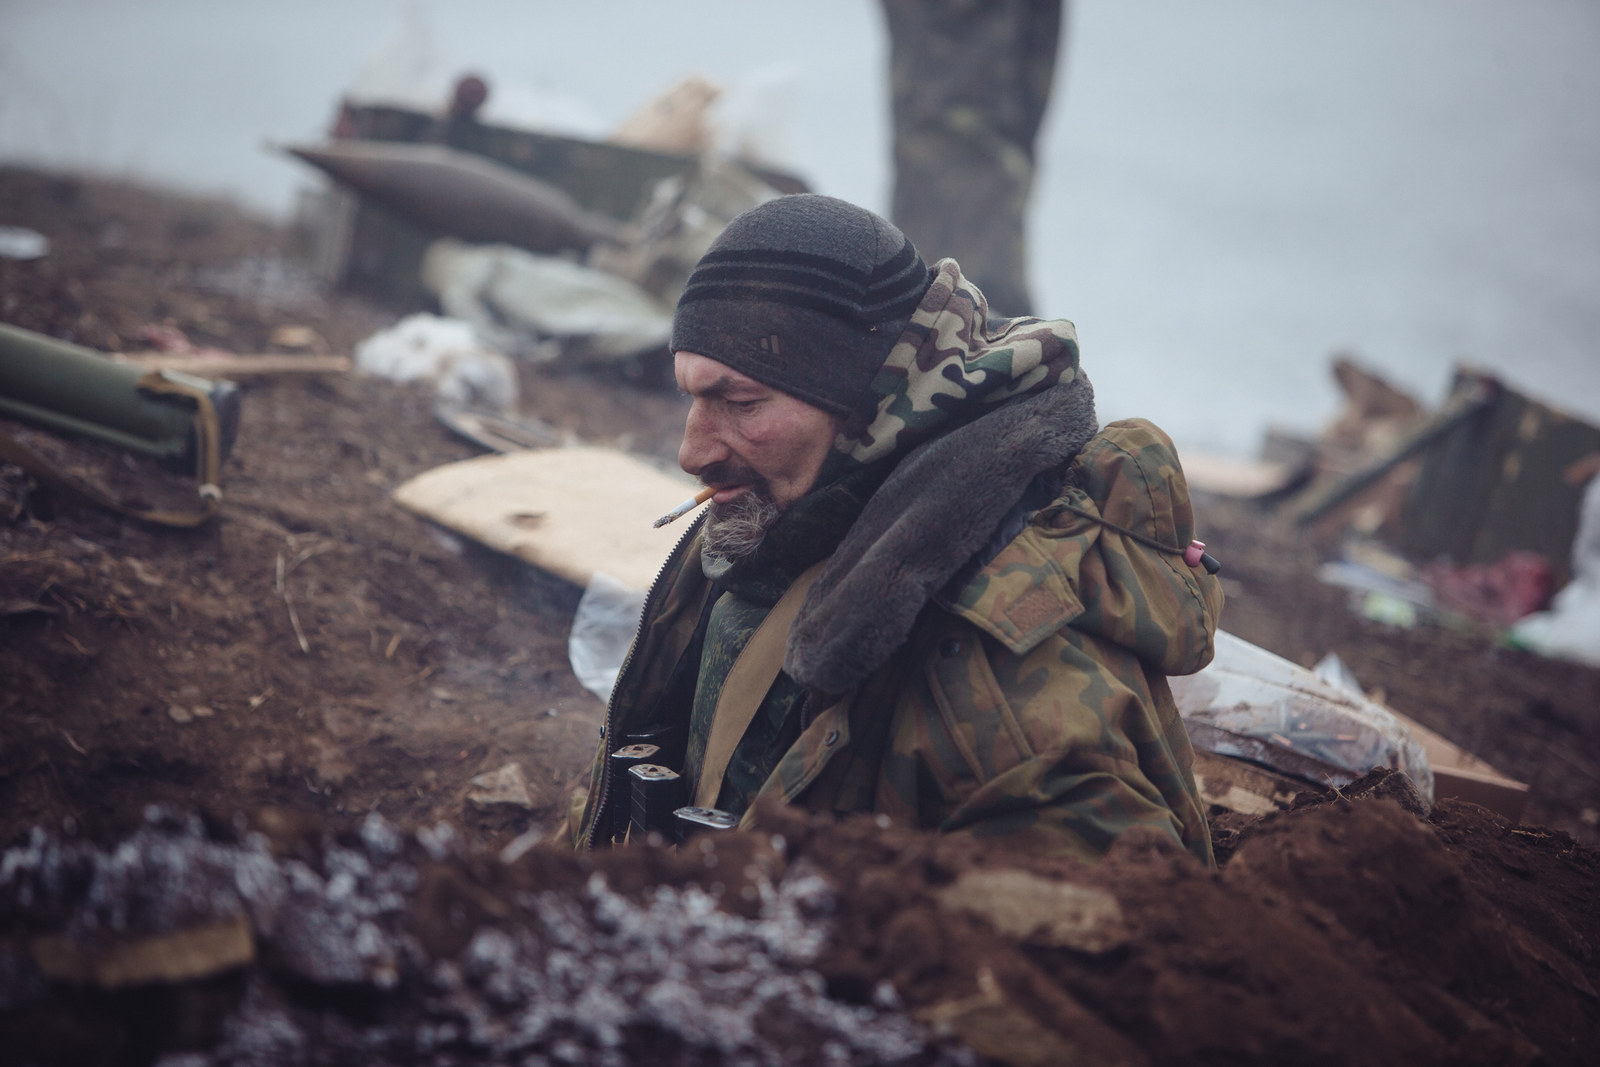 Horrific Image Capture The Sheer Brutality Of War In Ukraine